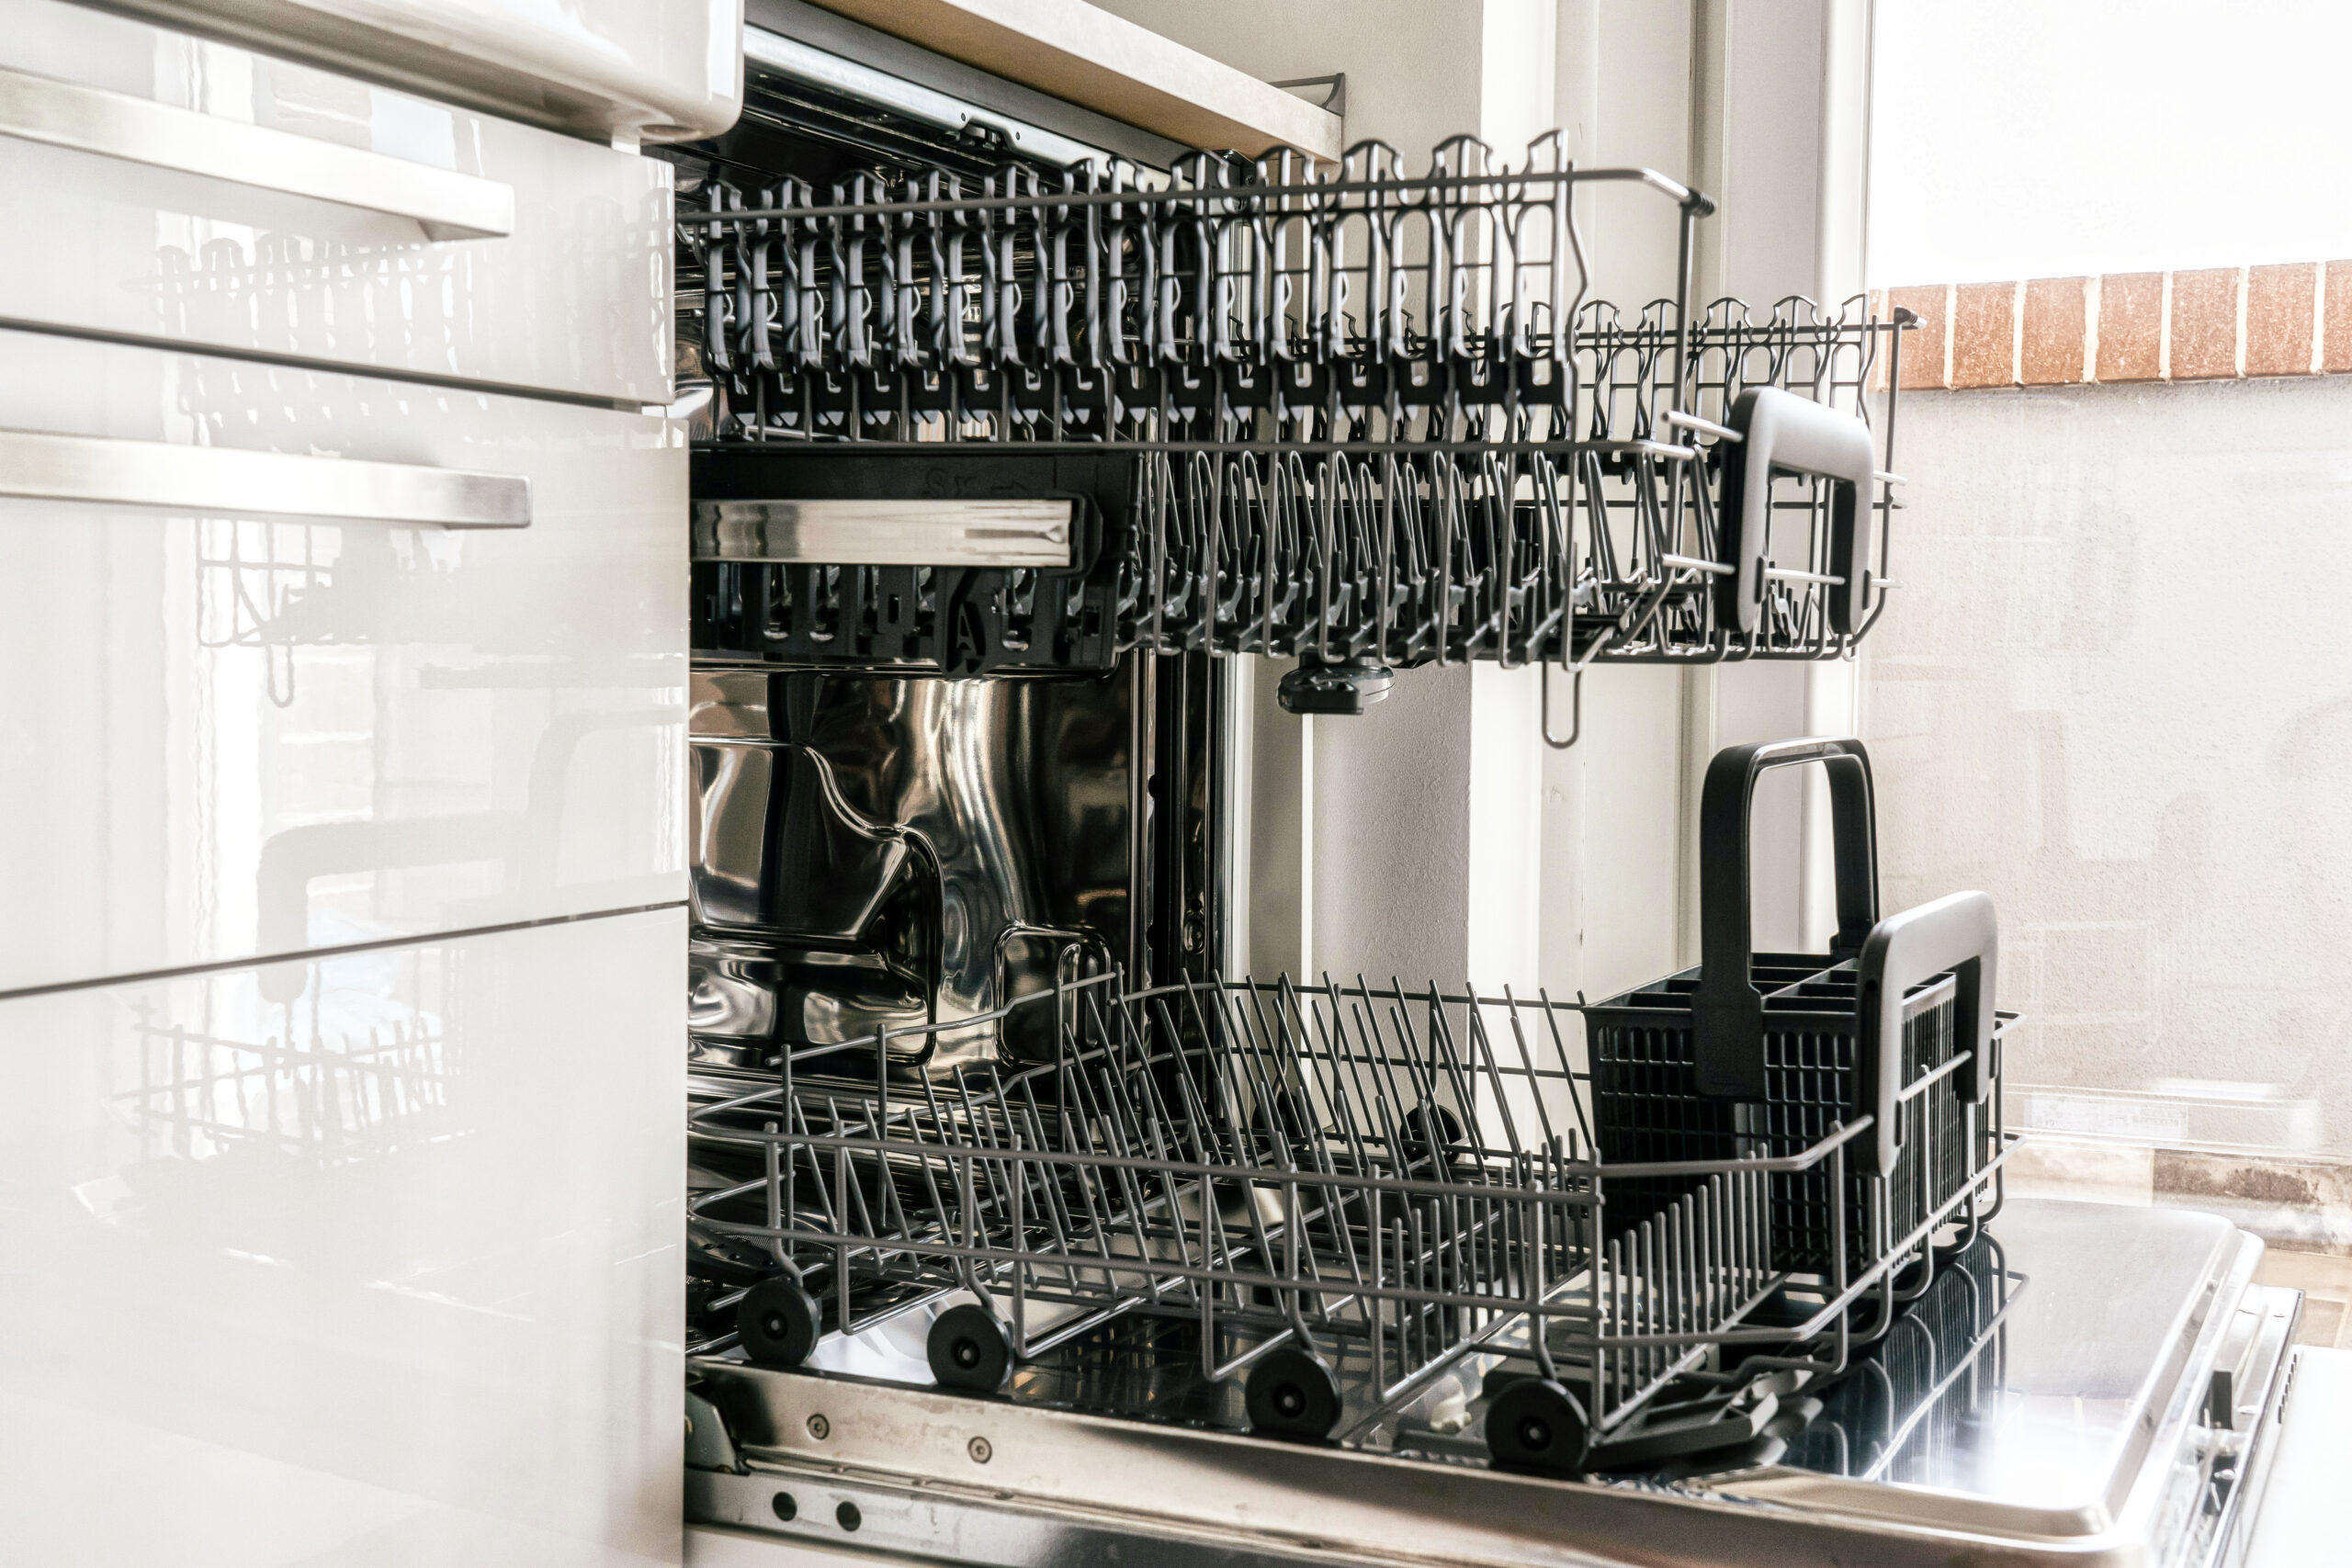 Top-rated Samsung dishwasher repair service in Georgetown, TX - AA Appliance Repair